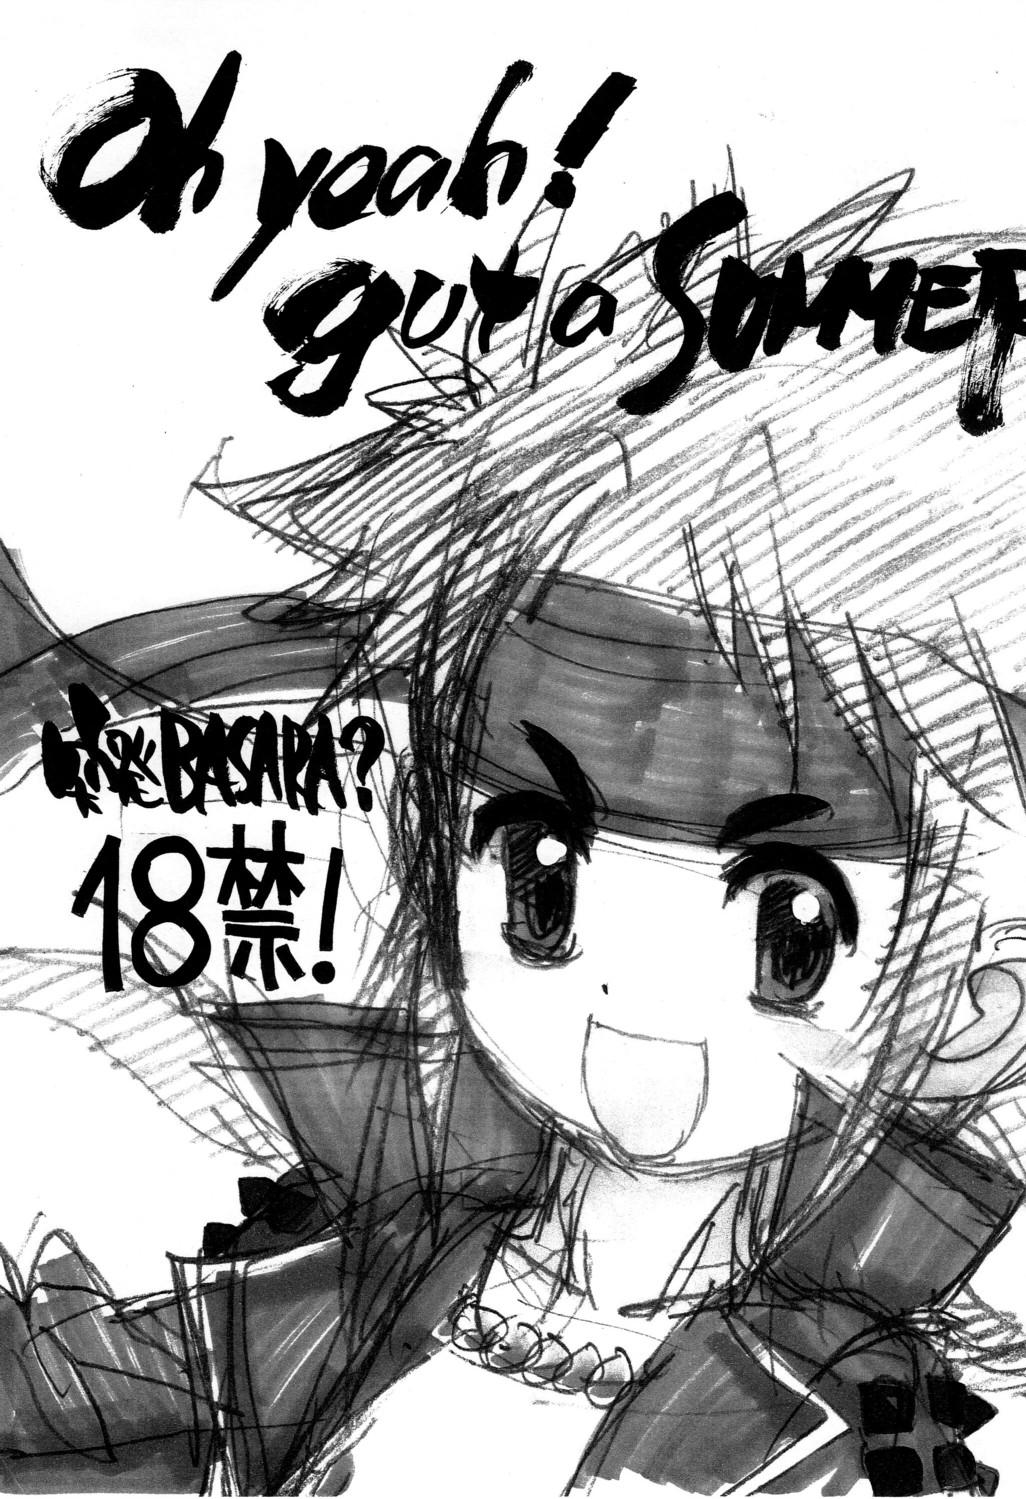 Marido Oh Yeah! Gut A Summer! - Sengoku basara Gostoso - Picture 1